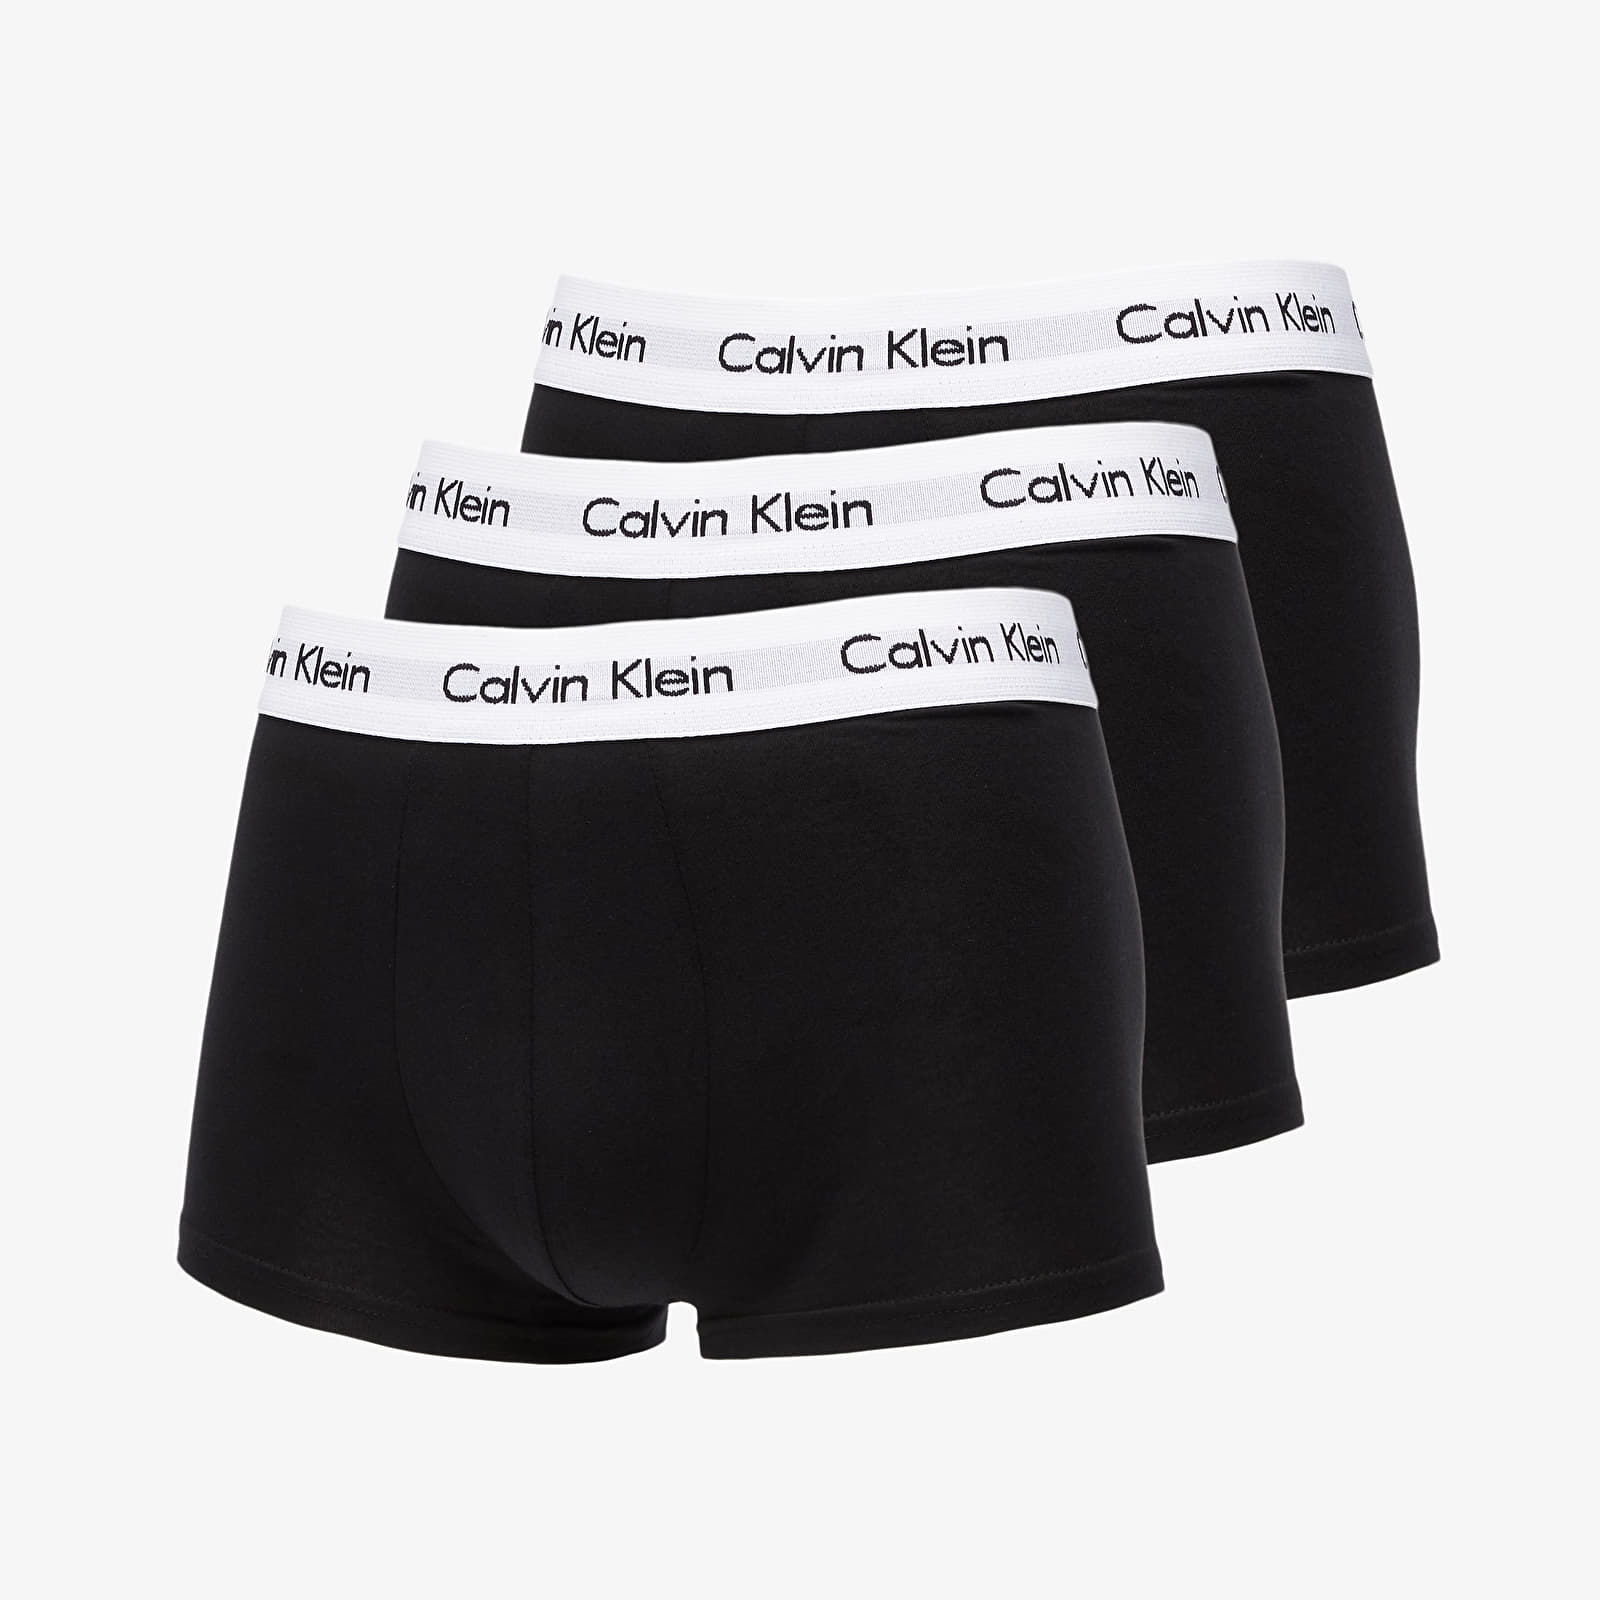 Añador Calvin Klein Low Rise Trunks 3 Pack Black